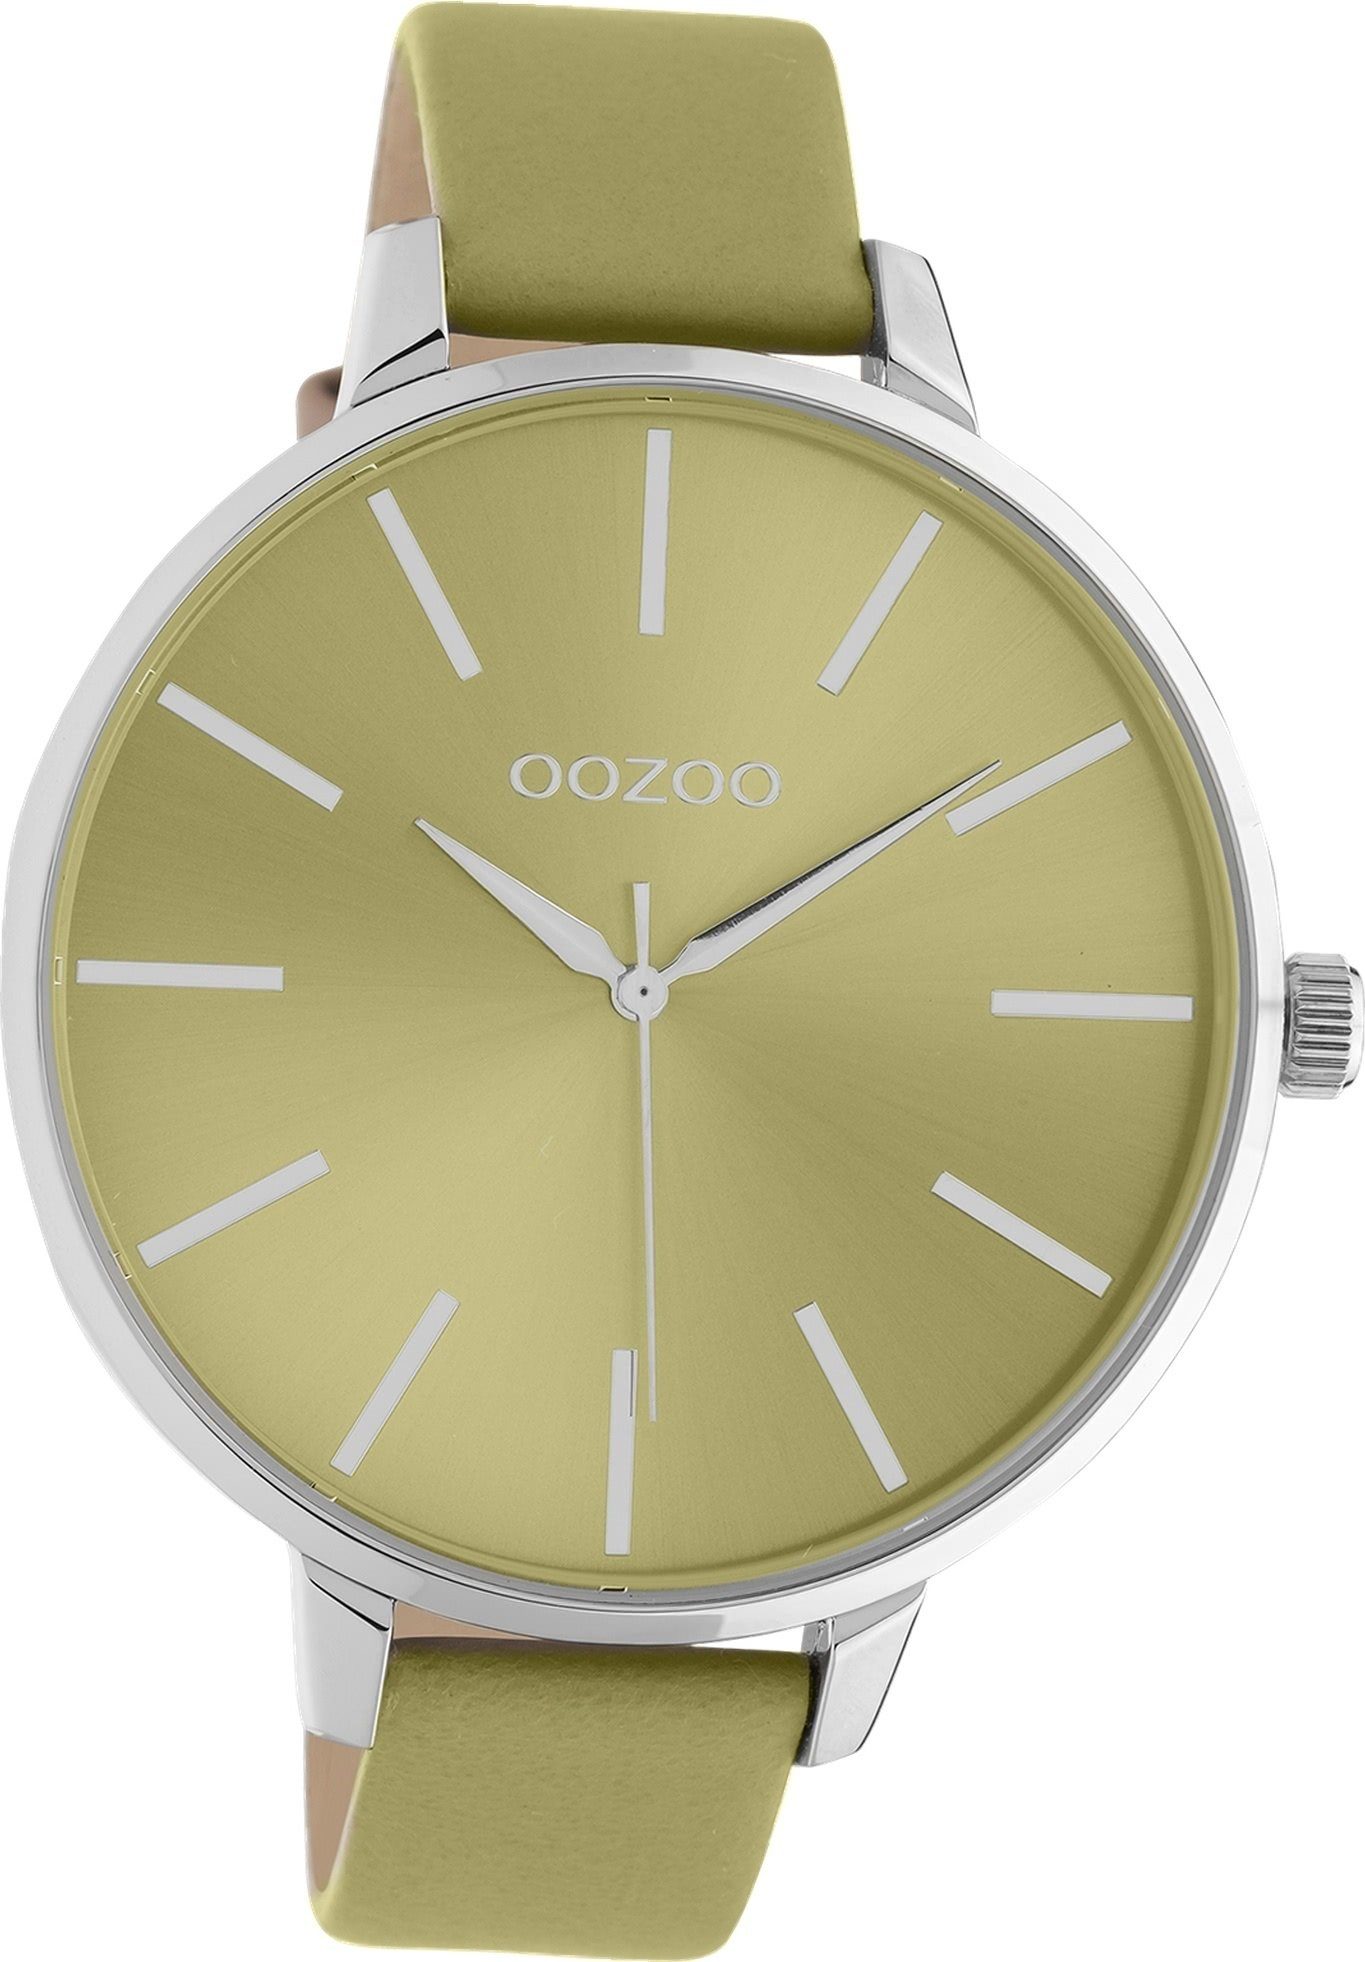 OOZOO Quarzuhr Oozoo Damen Armbanduhr Timepieces, Damenuhr Lederarmband ockergelb, rundes Gehäuse, extra groß (ca. 48mm) | Quarzuhren